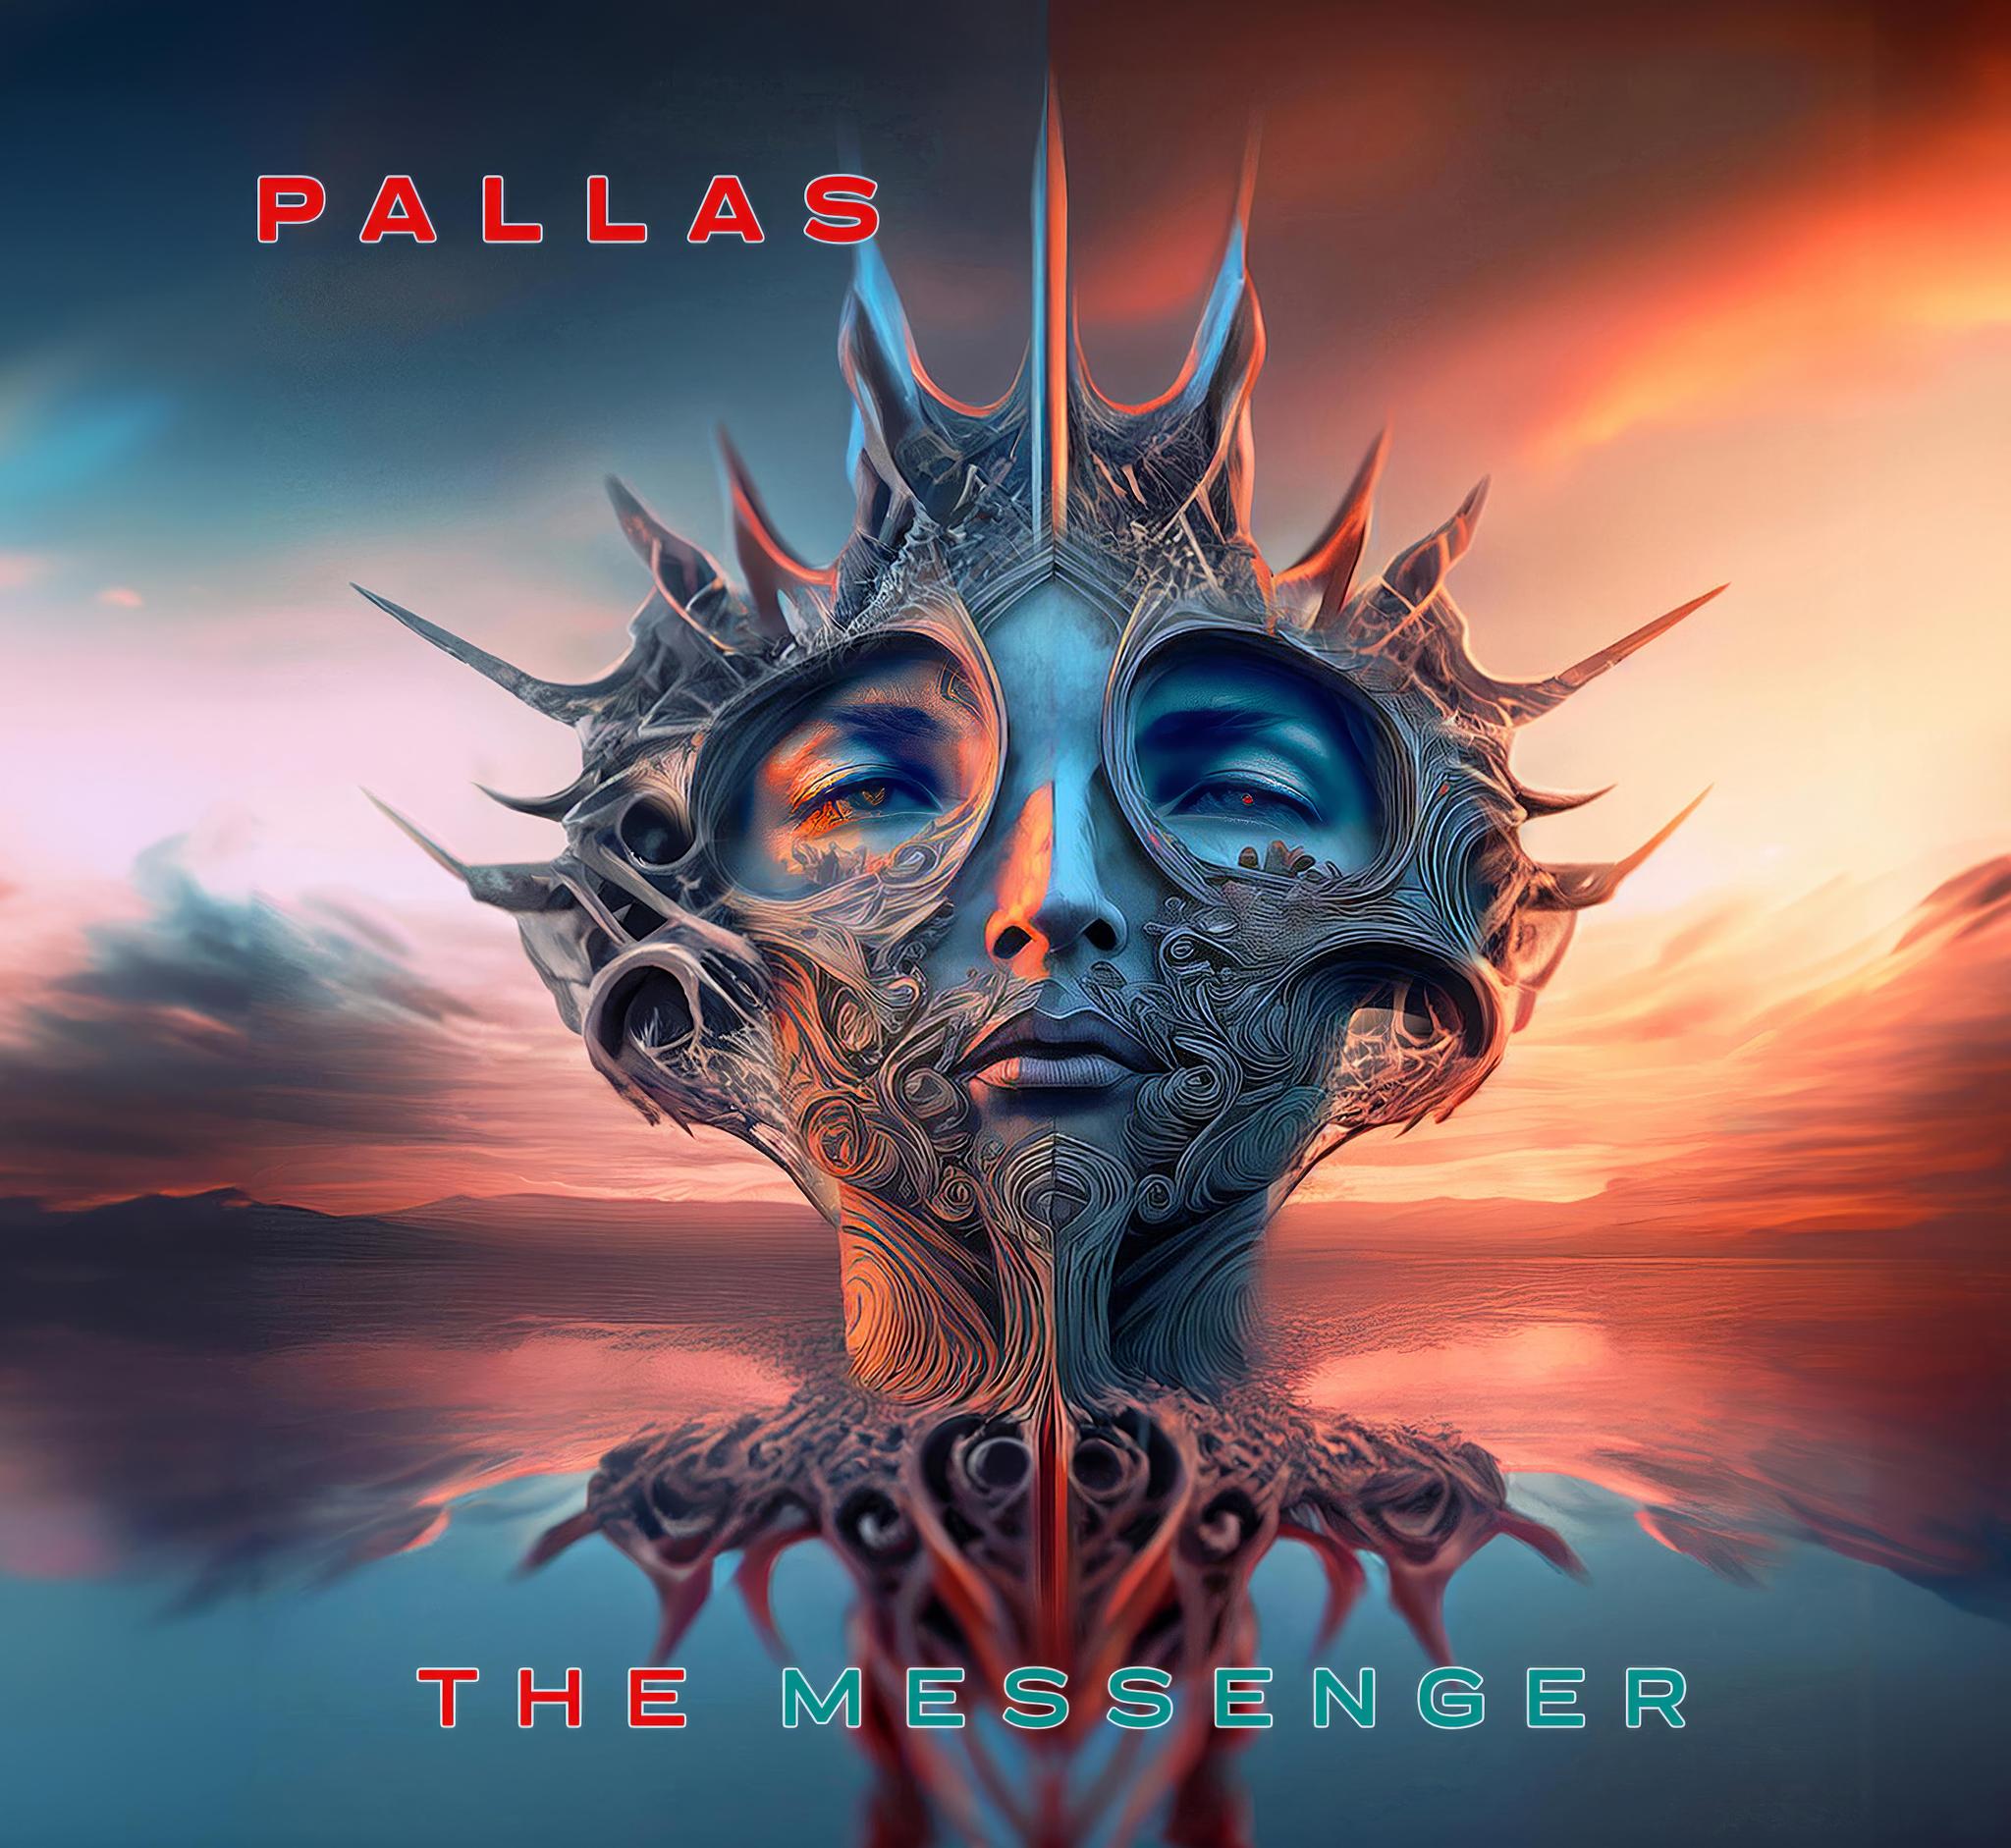 The Messenger - PALLAS